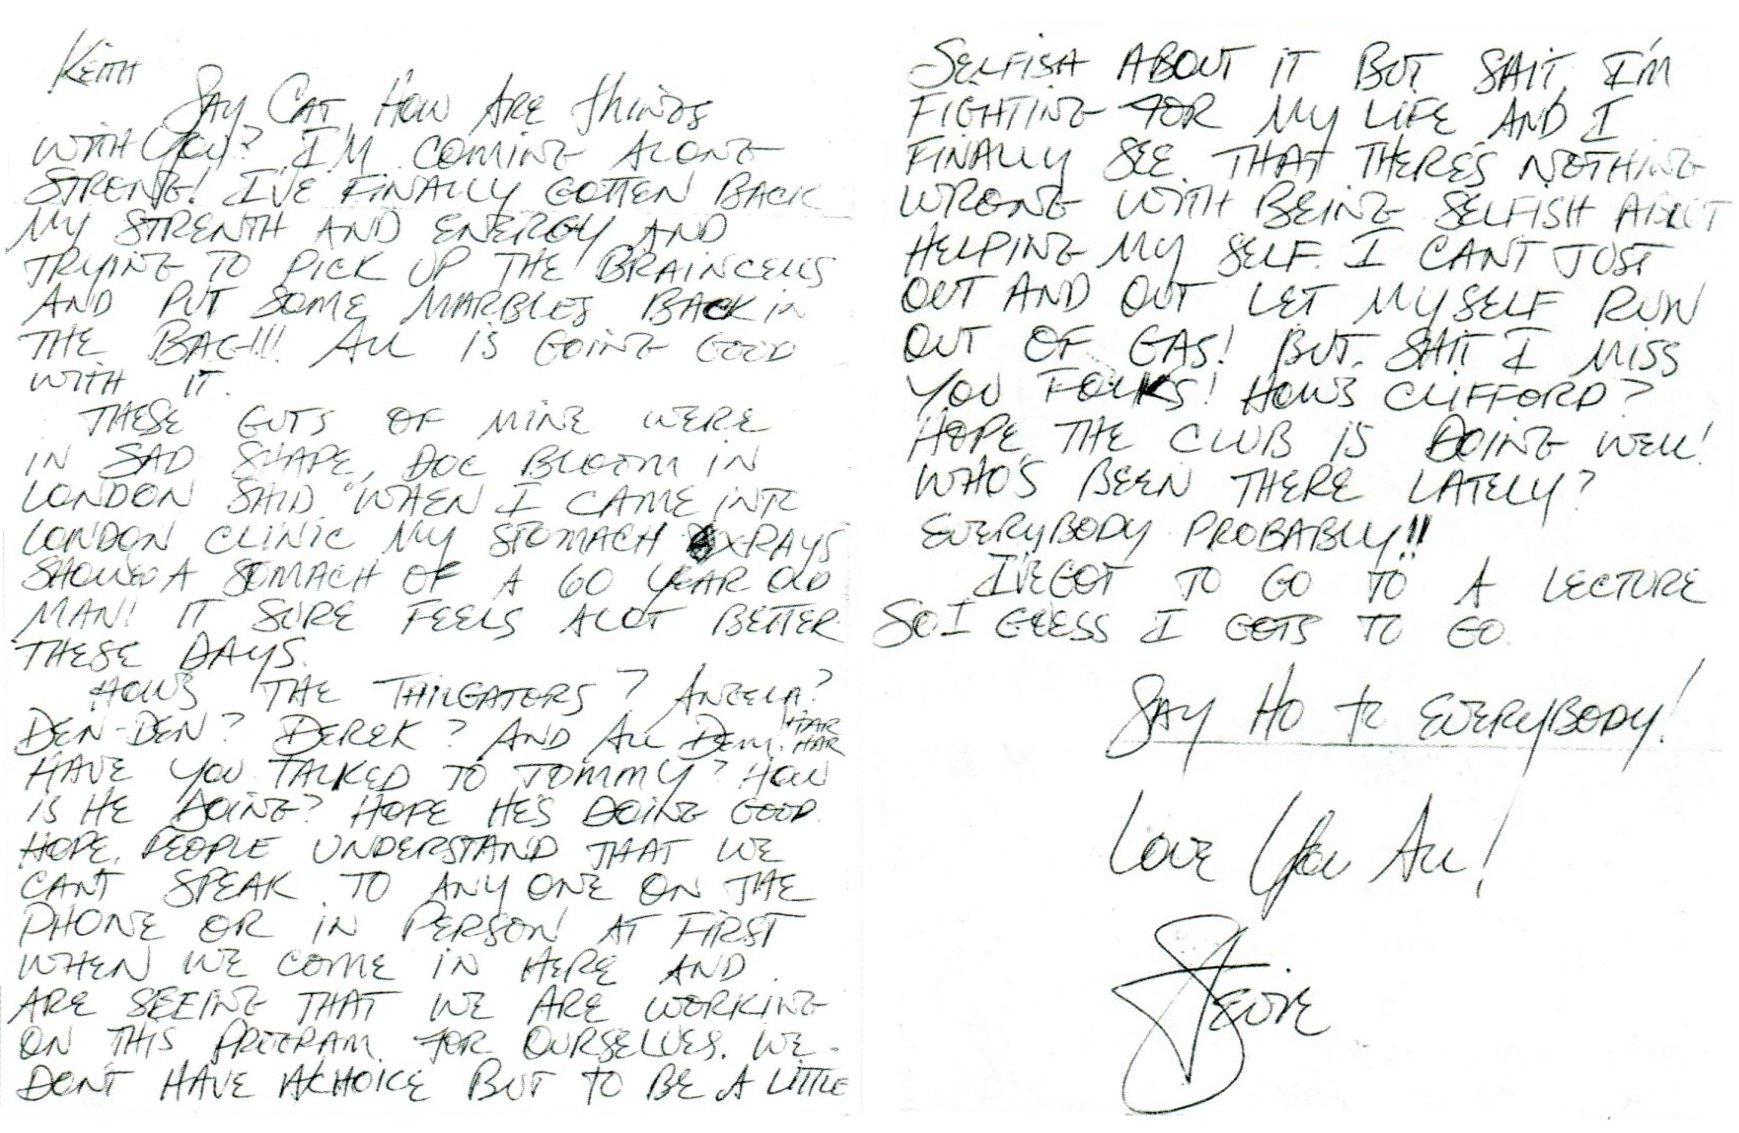 Stevie Ray Vaughan Letter from Rehab